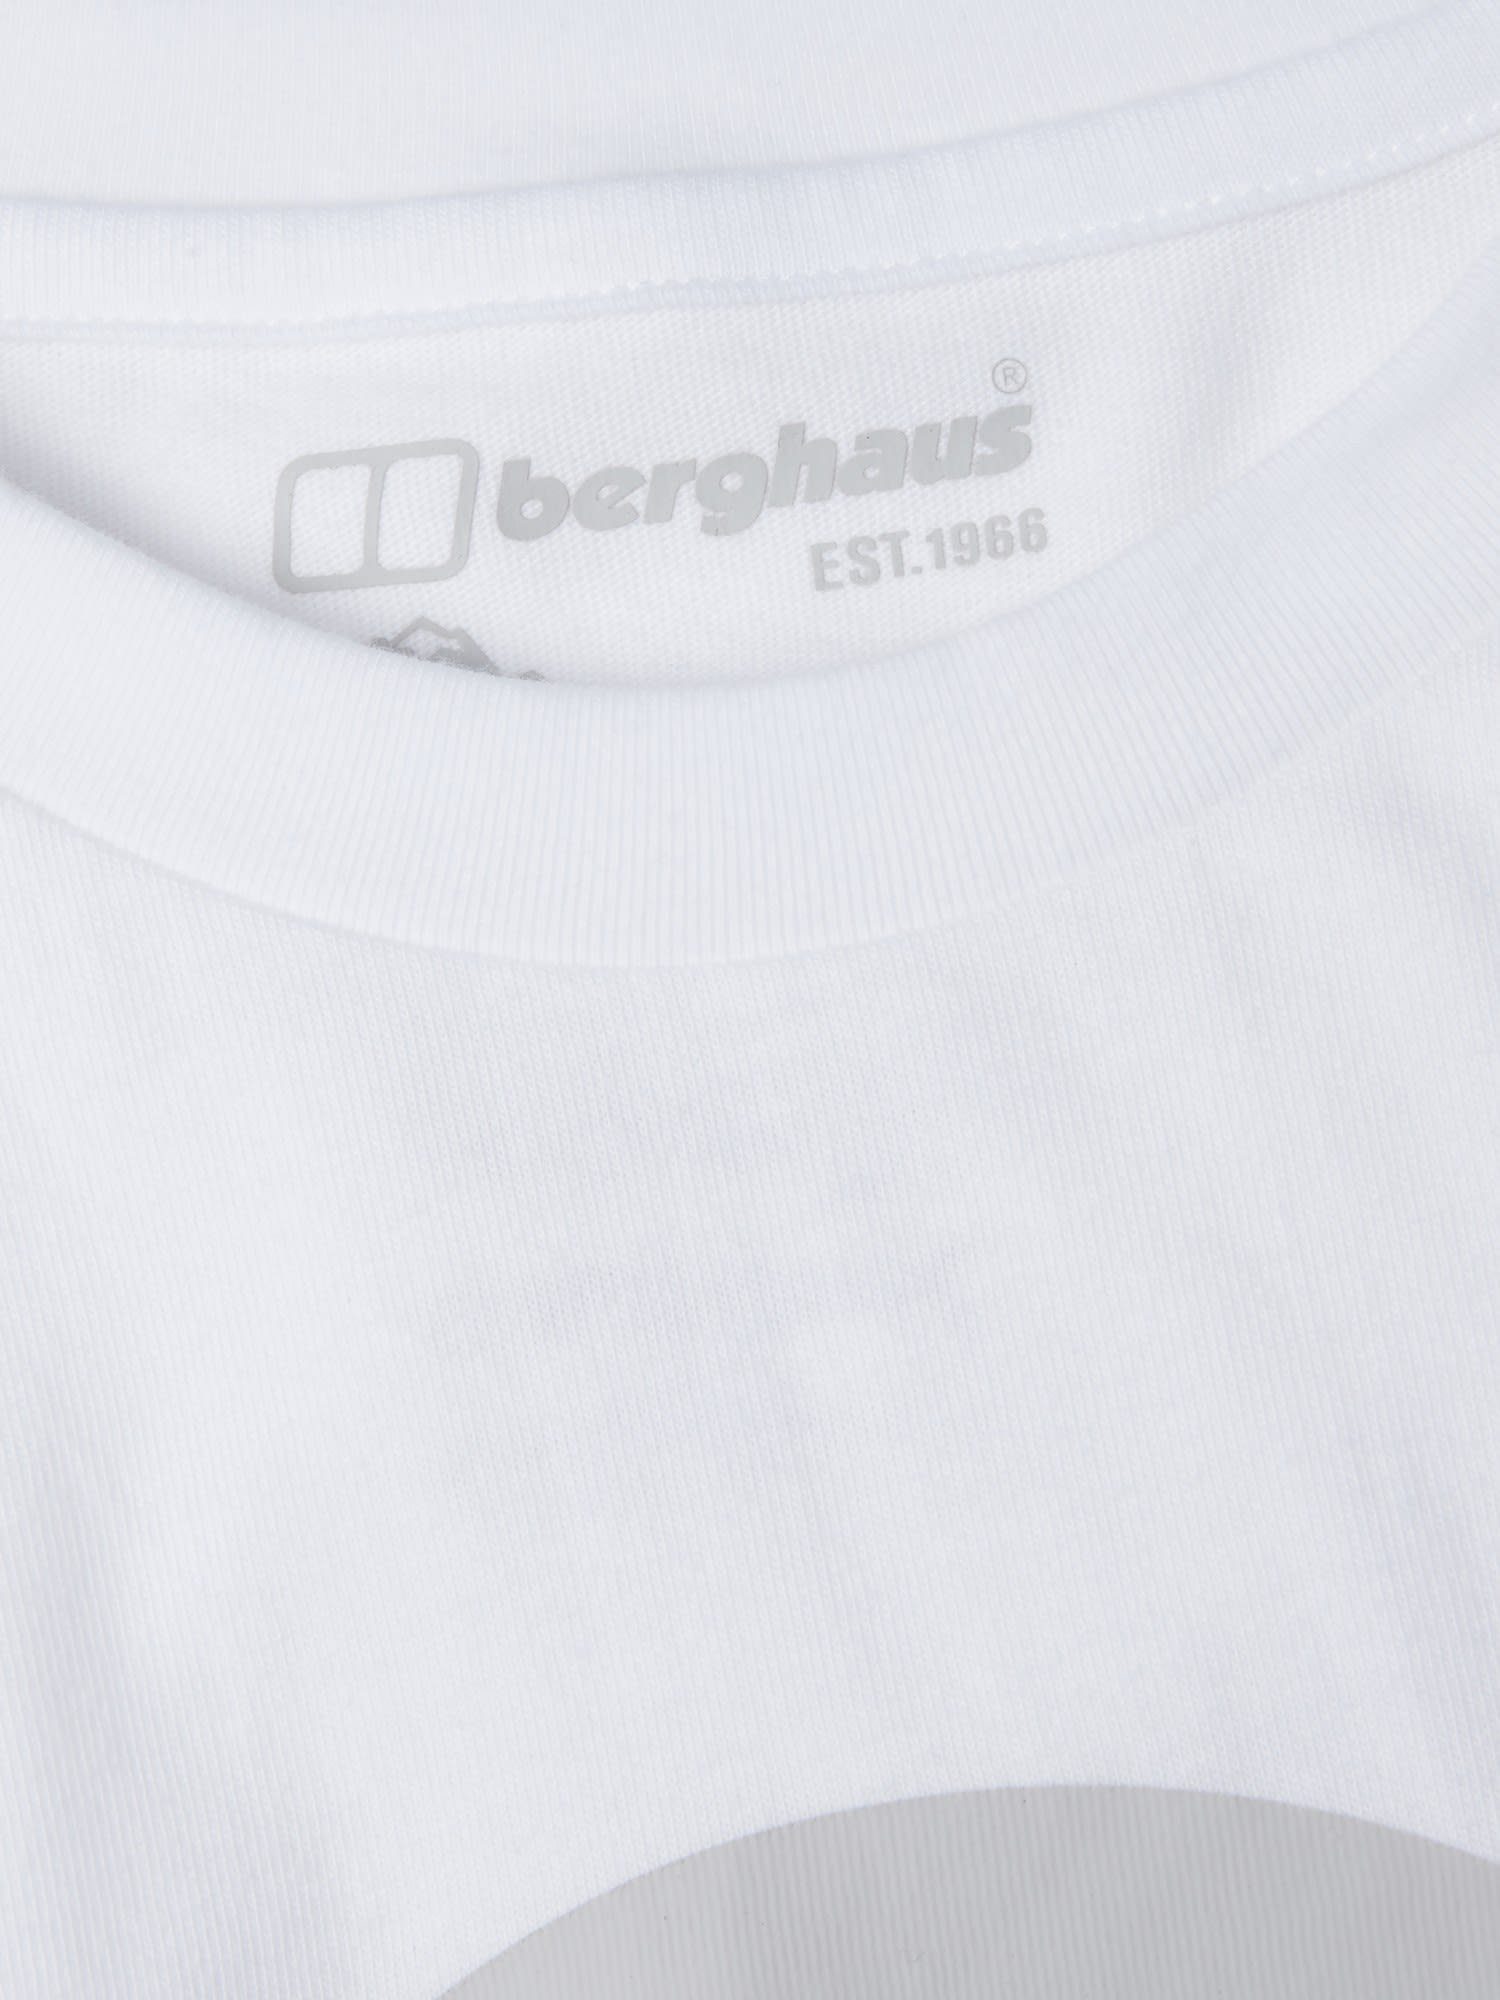 Berghaus Berghaus M Shirt Pure Edale T Mountain Herren White T-Shirt